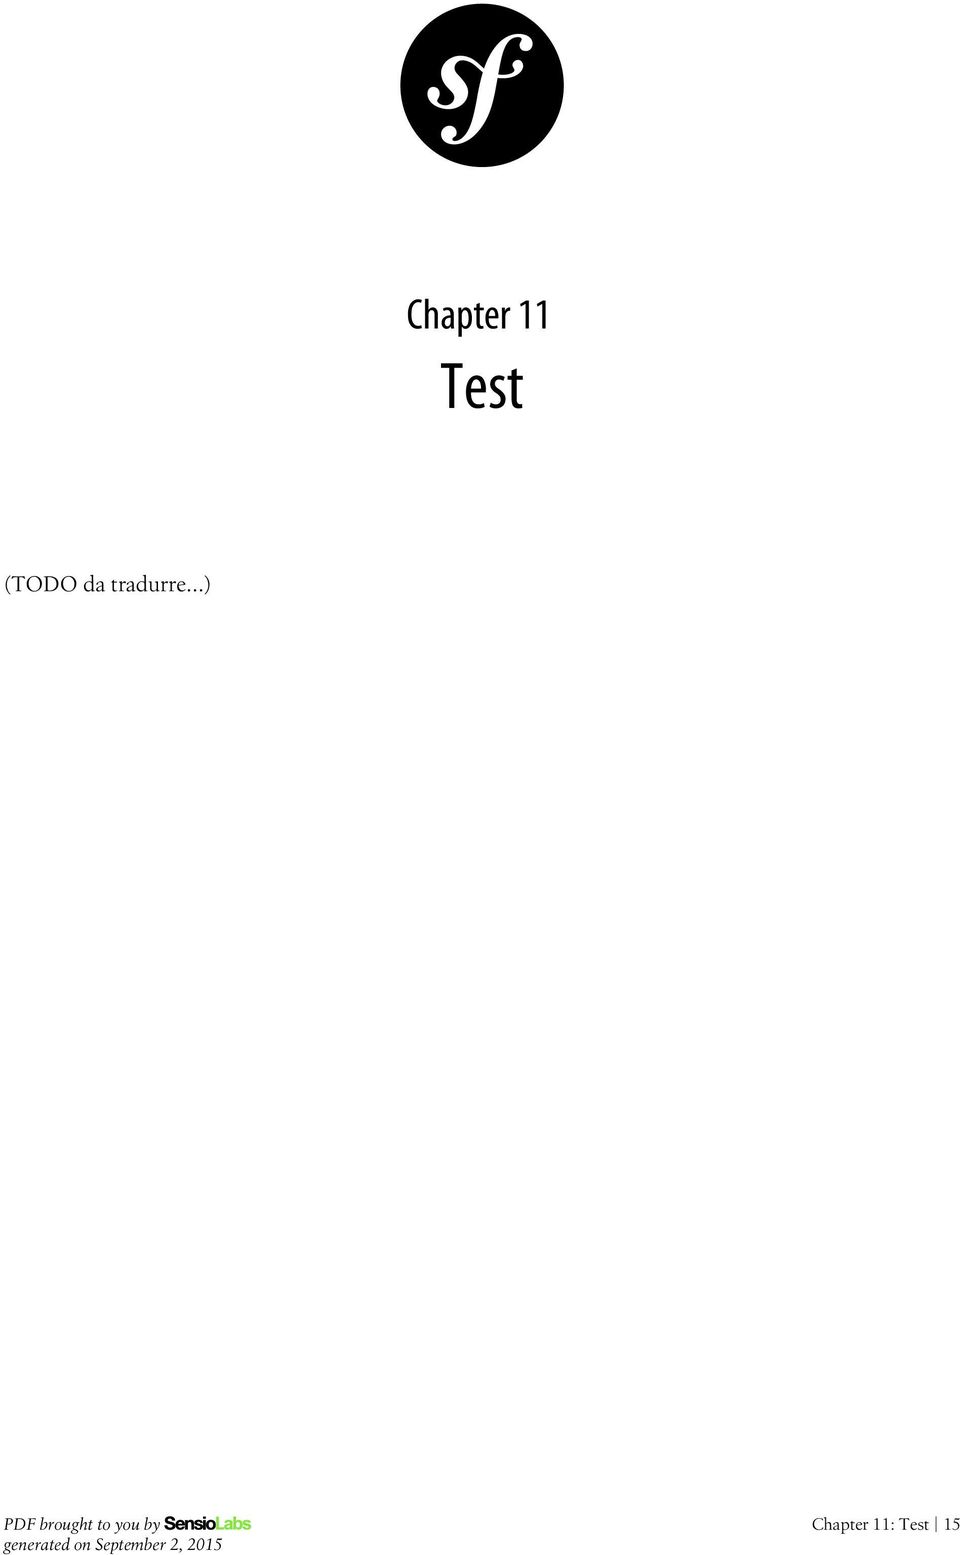 11: Test